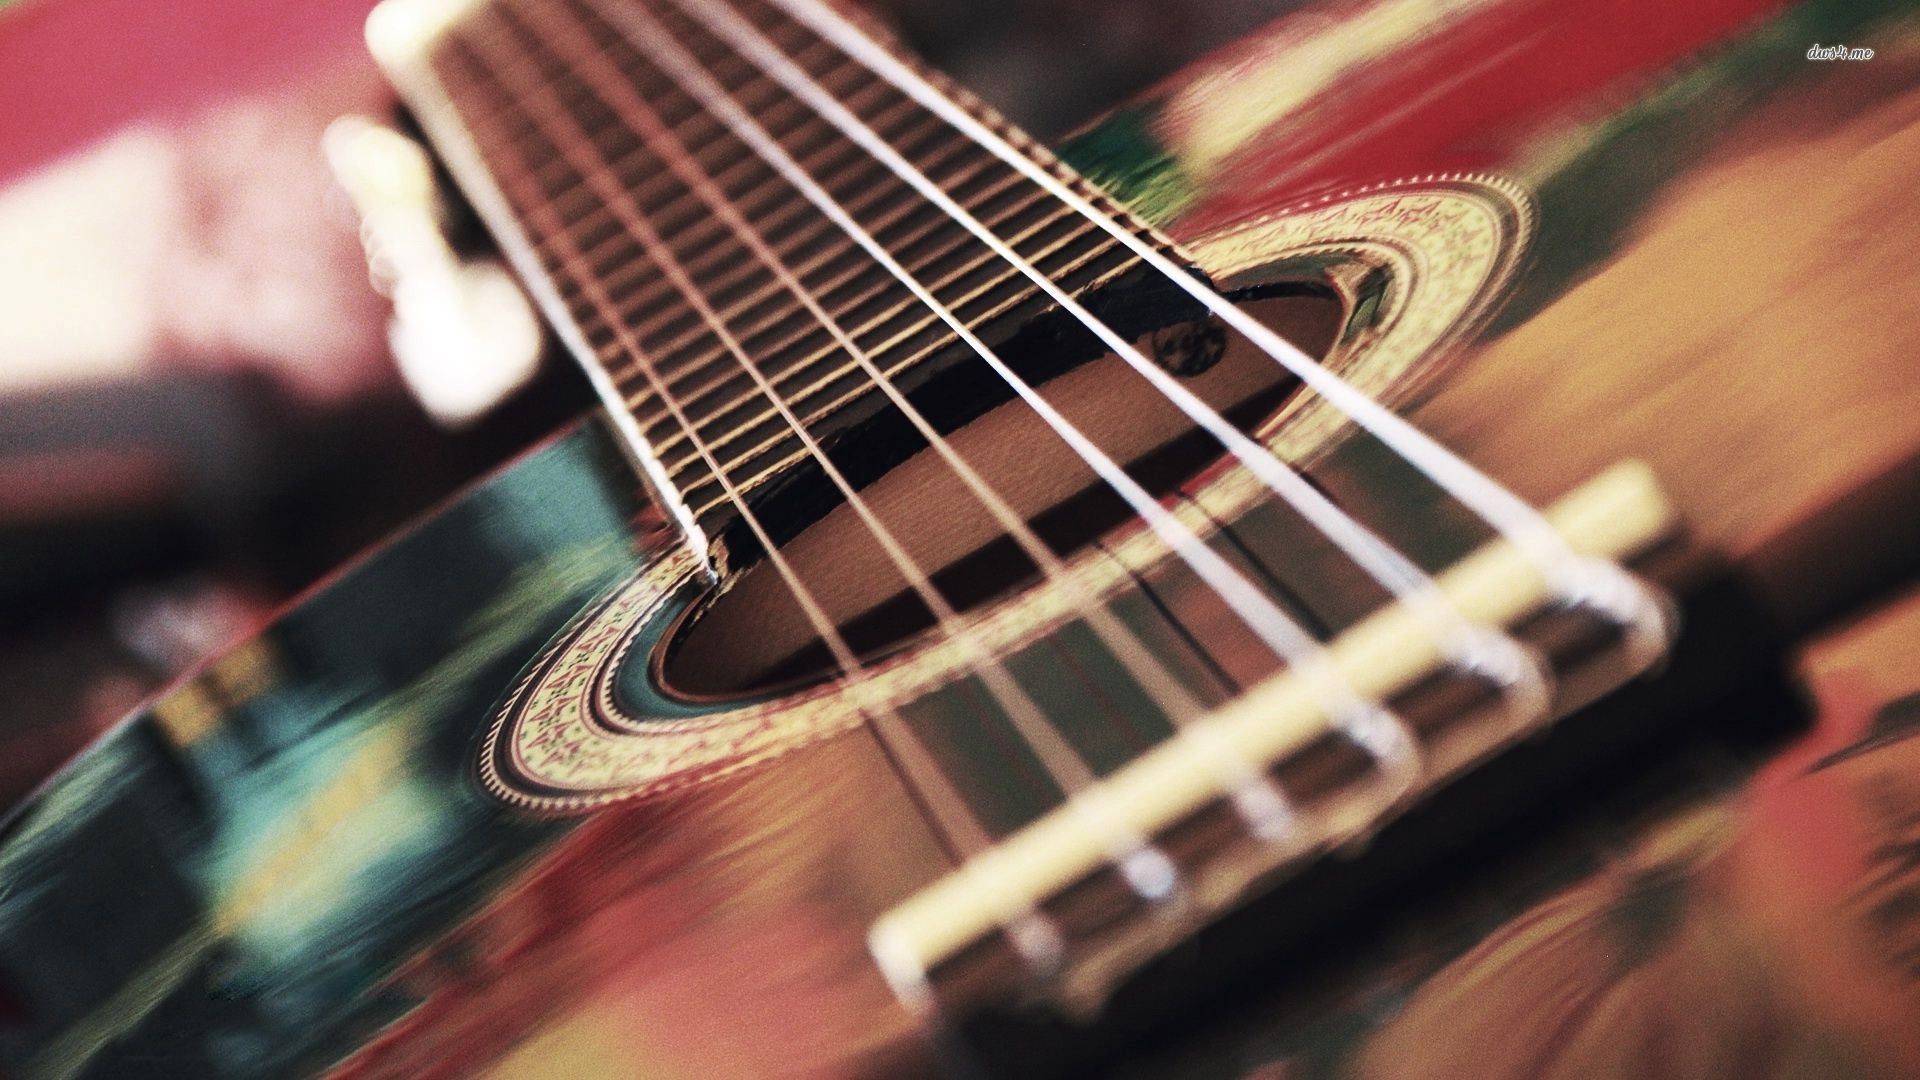 1920x1080  Acoustic guitar strings wallpaper - Music wallpapers - #